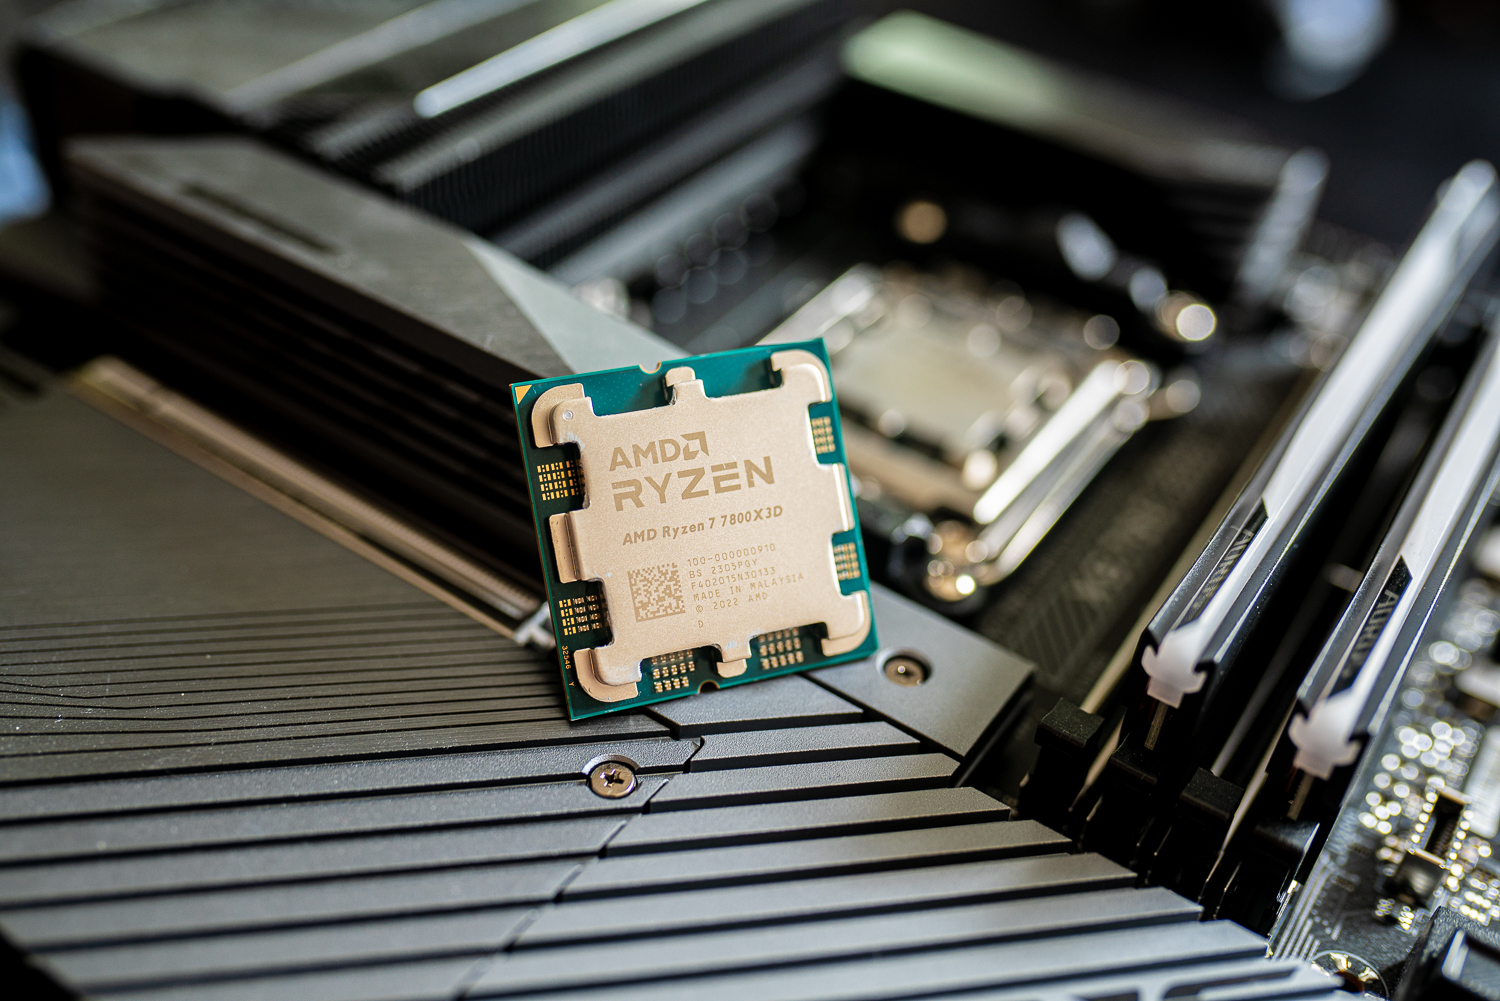 New Ryzen 7 7800X3D CPU Gaming benchmarking leak - OC3D